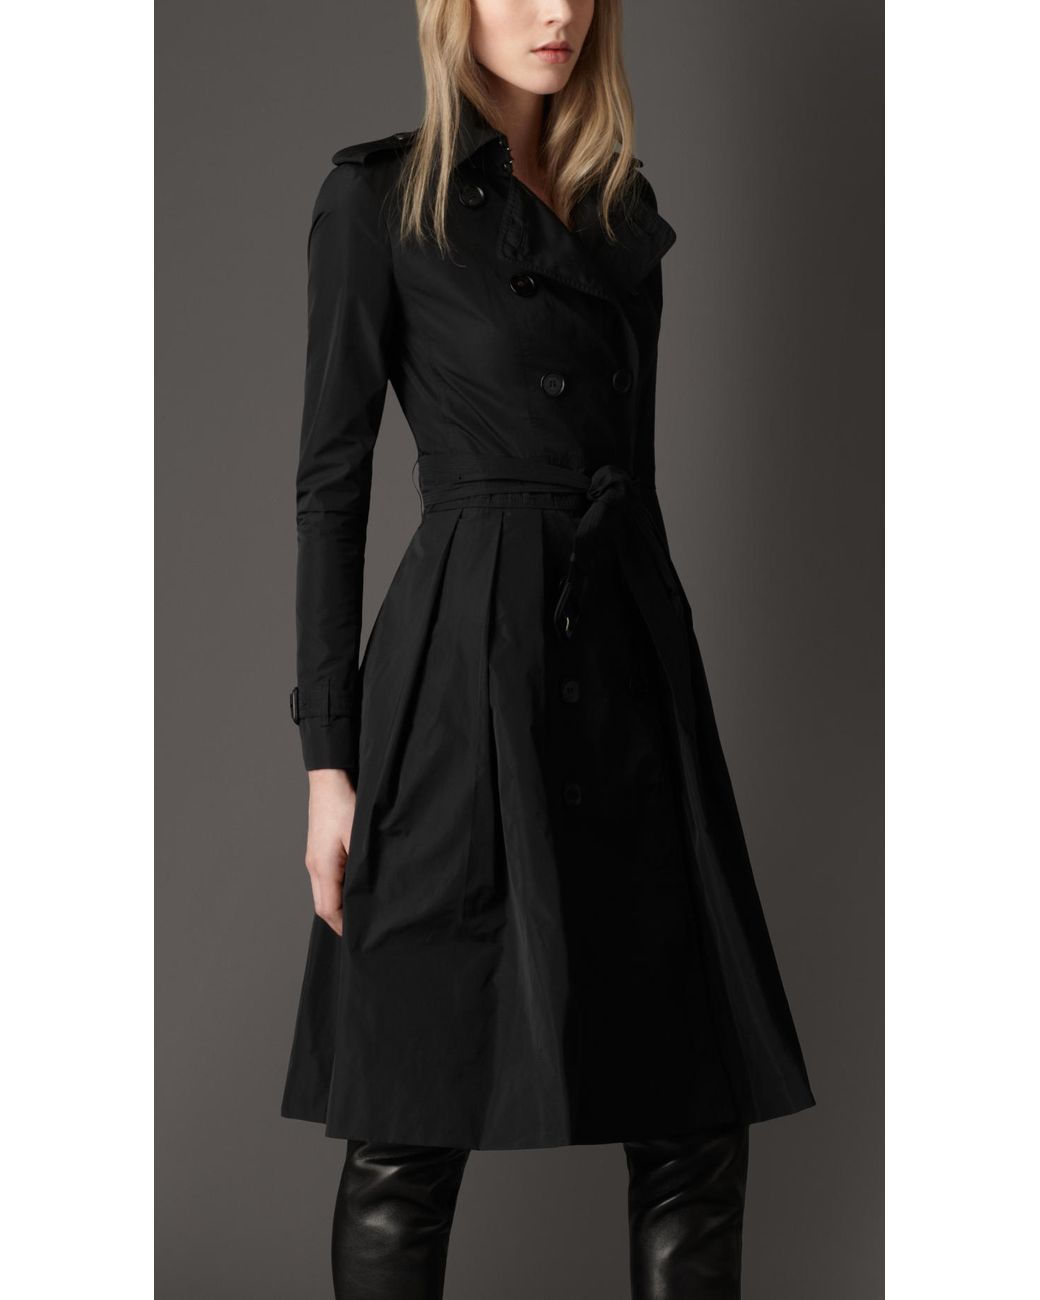 burberry black long pleated full skirt trench coat product 1 3812254 627451339